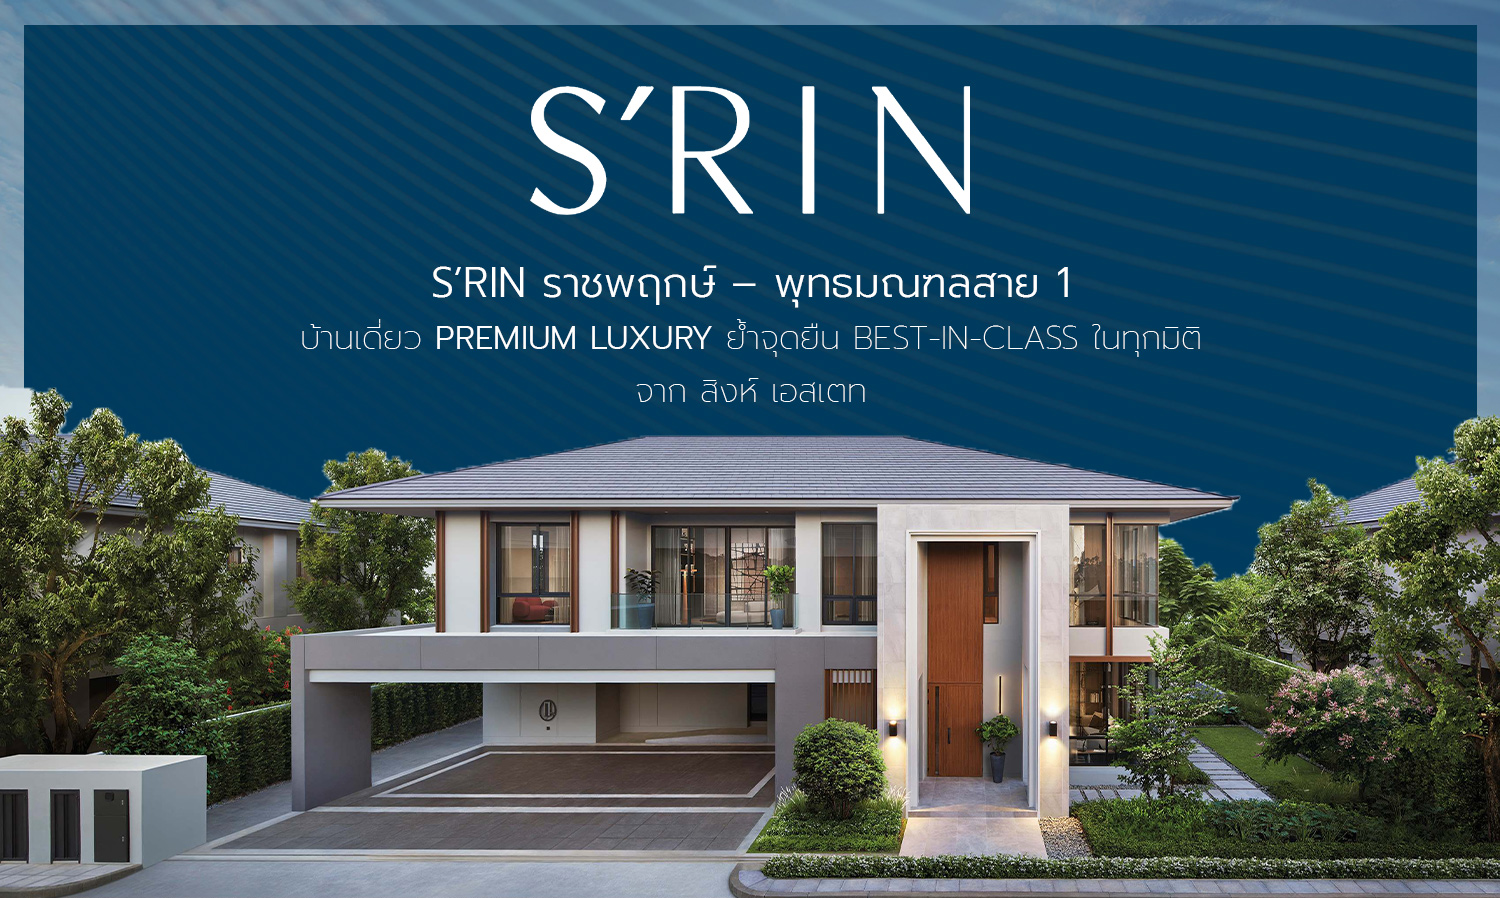 S RIN ราชพฤกษ์ – พุทธมณฑลสาย 1 บ้านเดี่ยว Premium Luxury ย้ำจุดยืน Best-in-Class ในทุกมิติ จาก สิงห์ เอสเตท